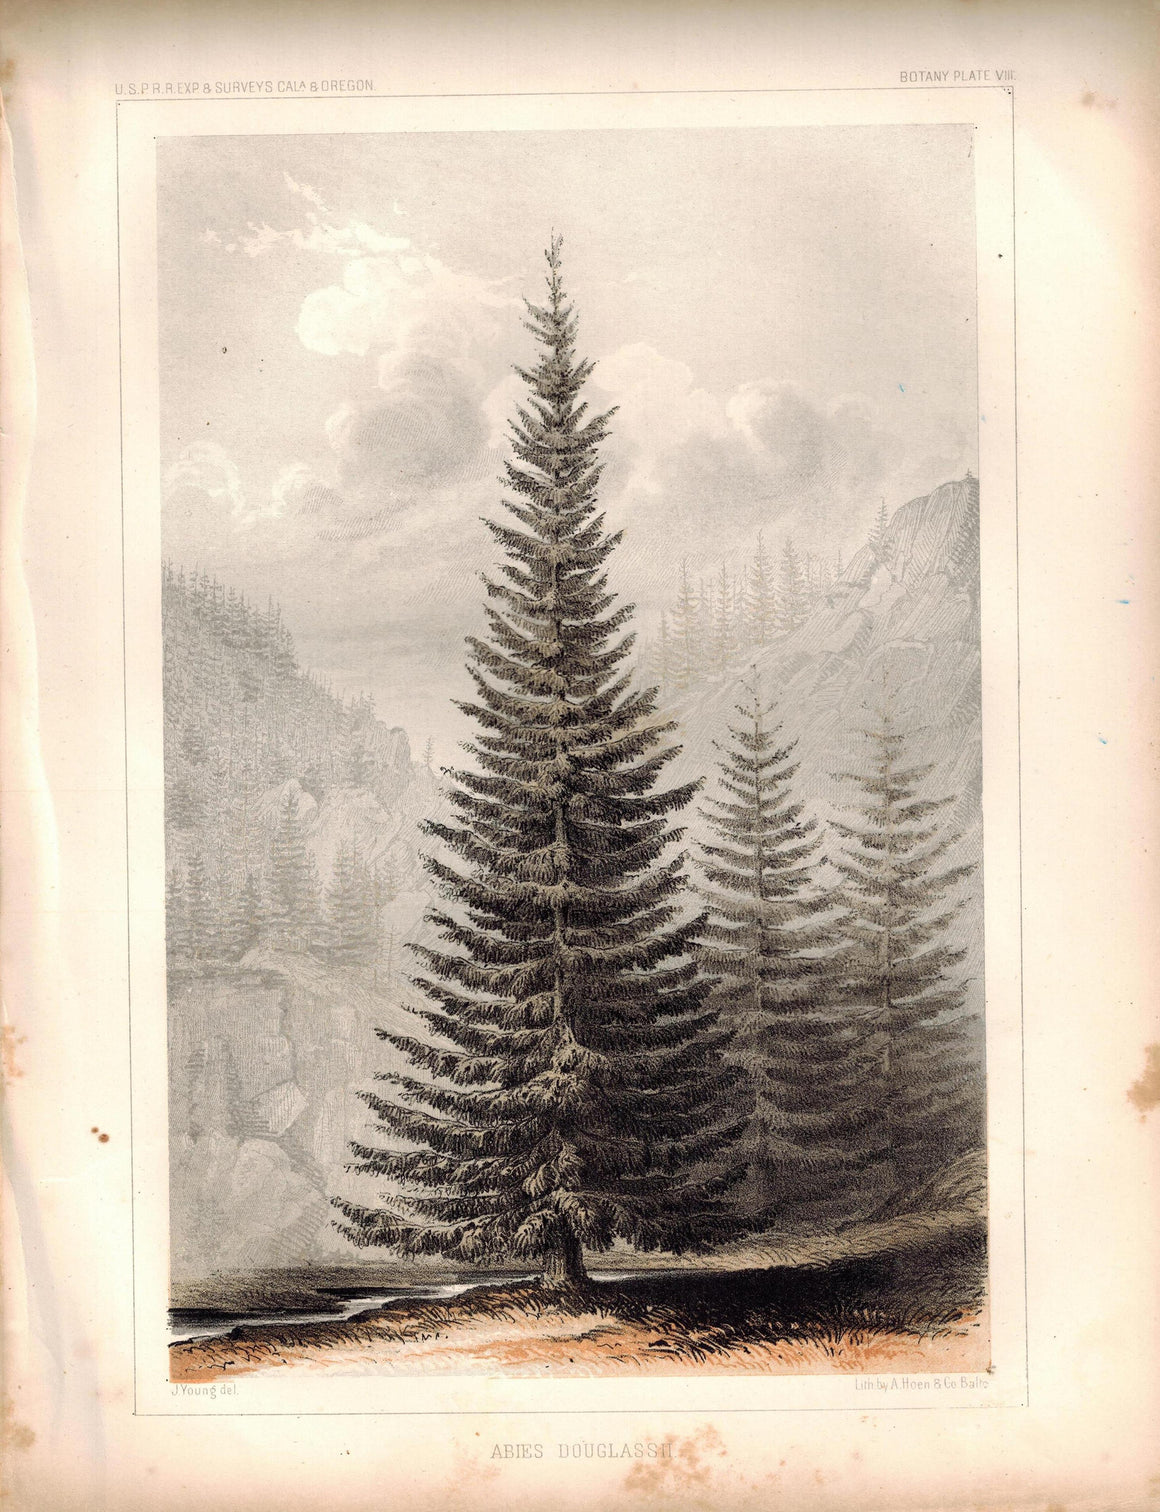 Abies Douglassii Tree Antique Botany Plate VIII 1857 USPRR Survey Print